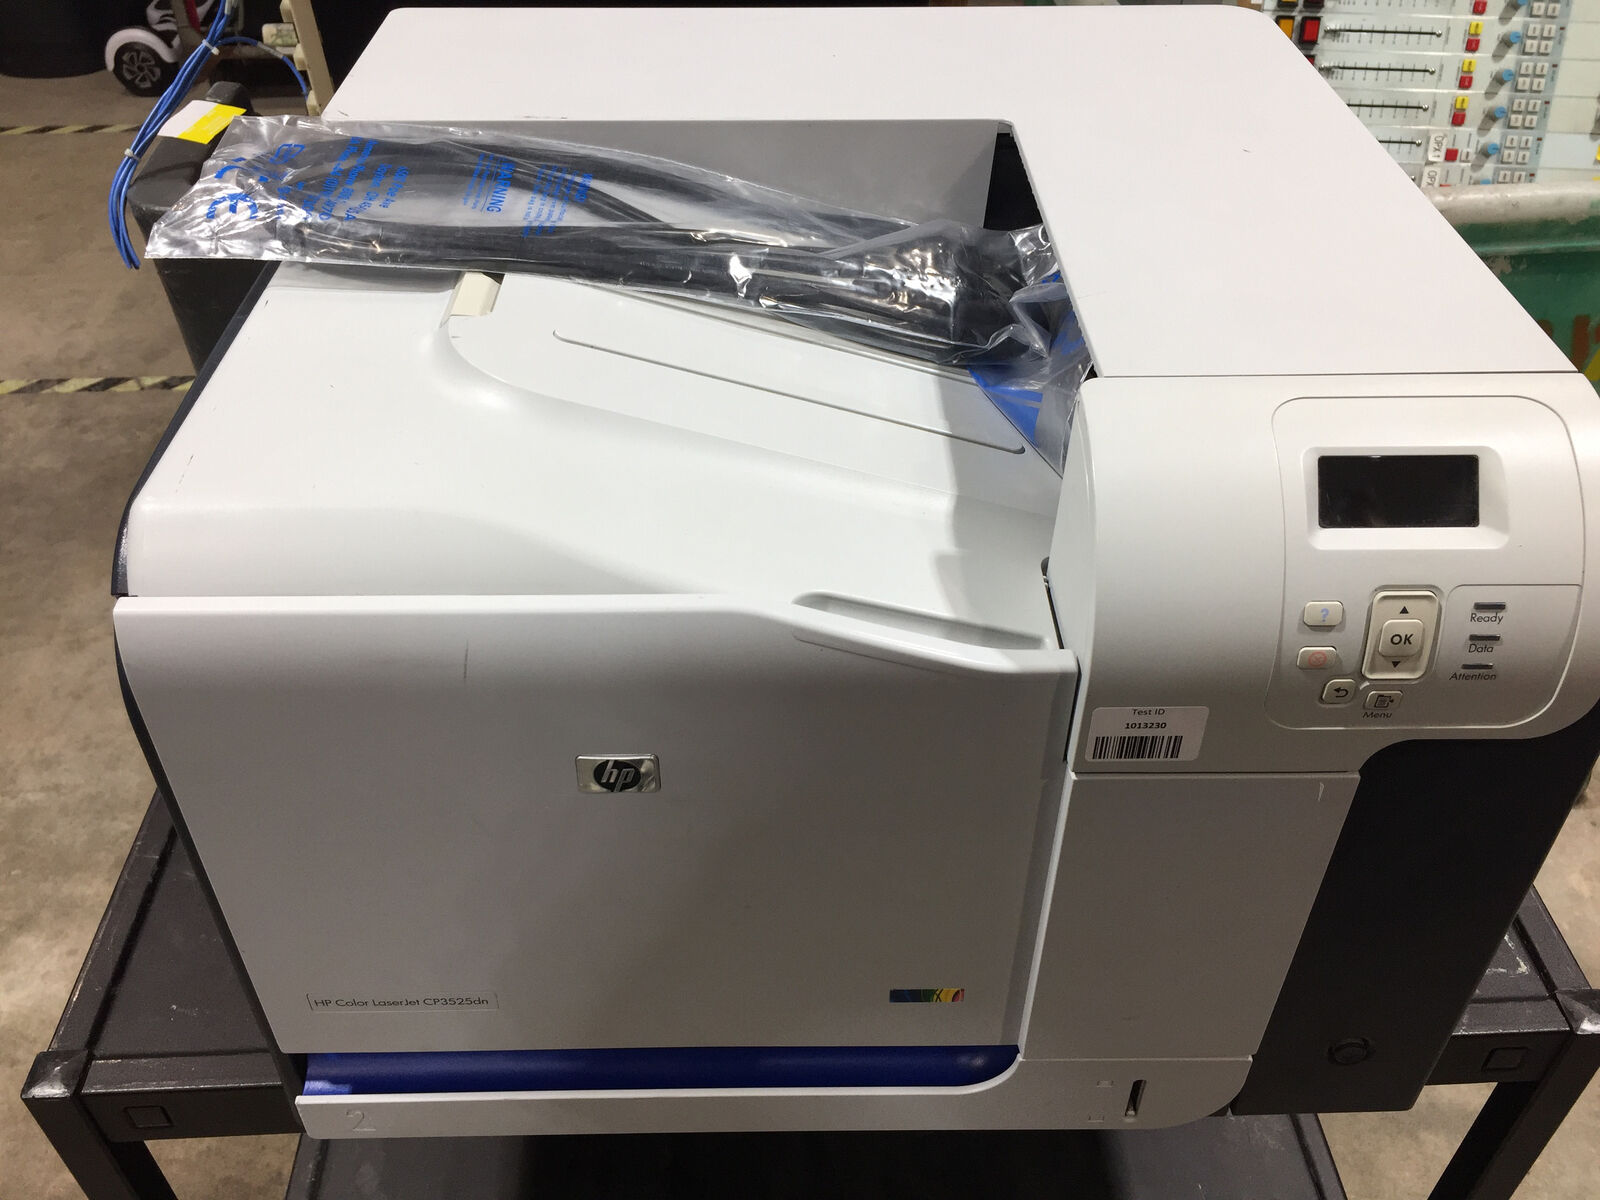 HP Hewlett Packard Color LaserJet Printer CP3525 Workgroup Model CXXXXA